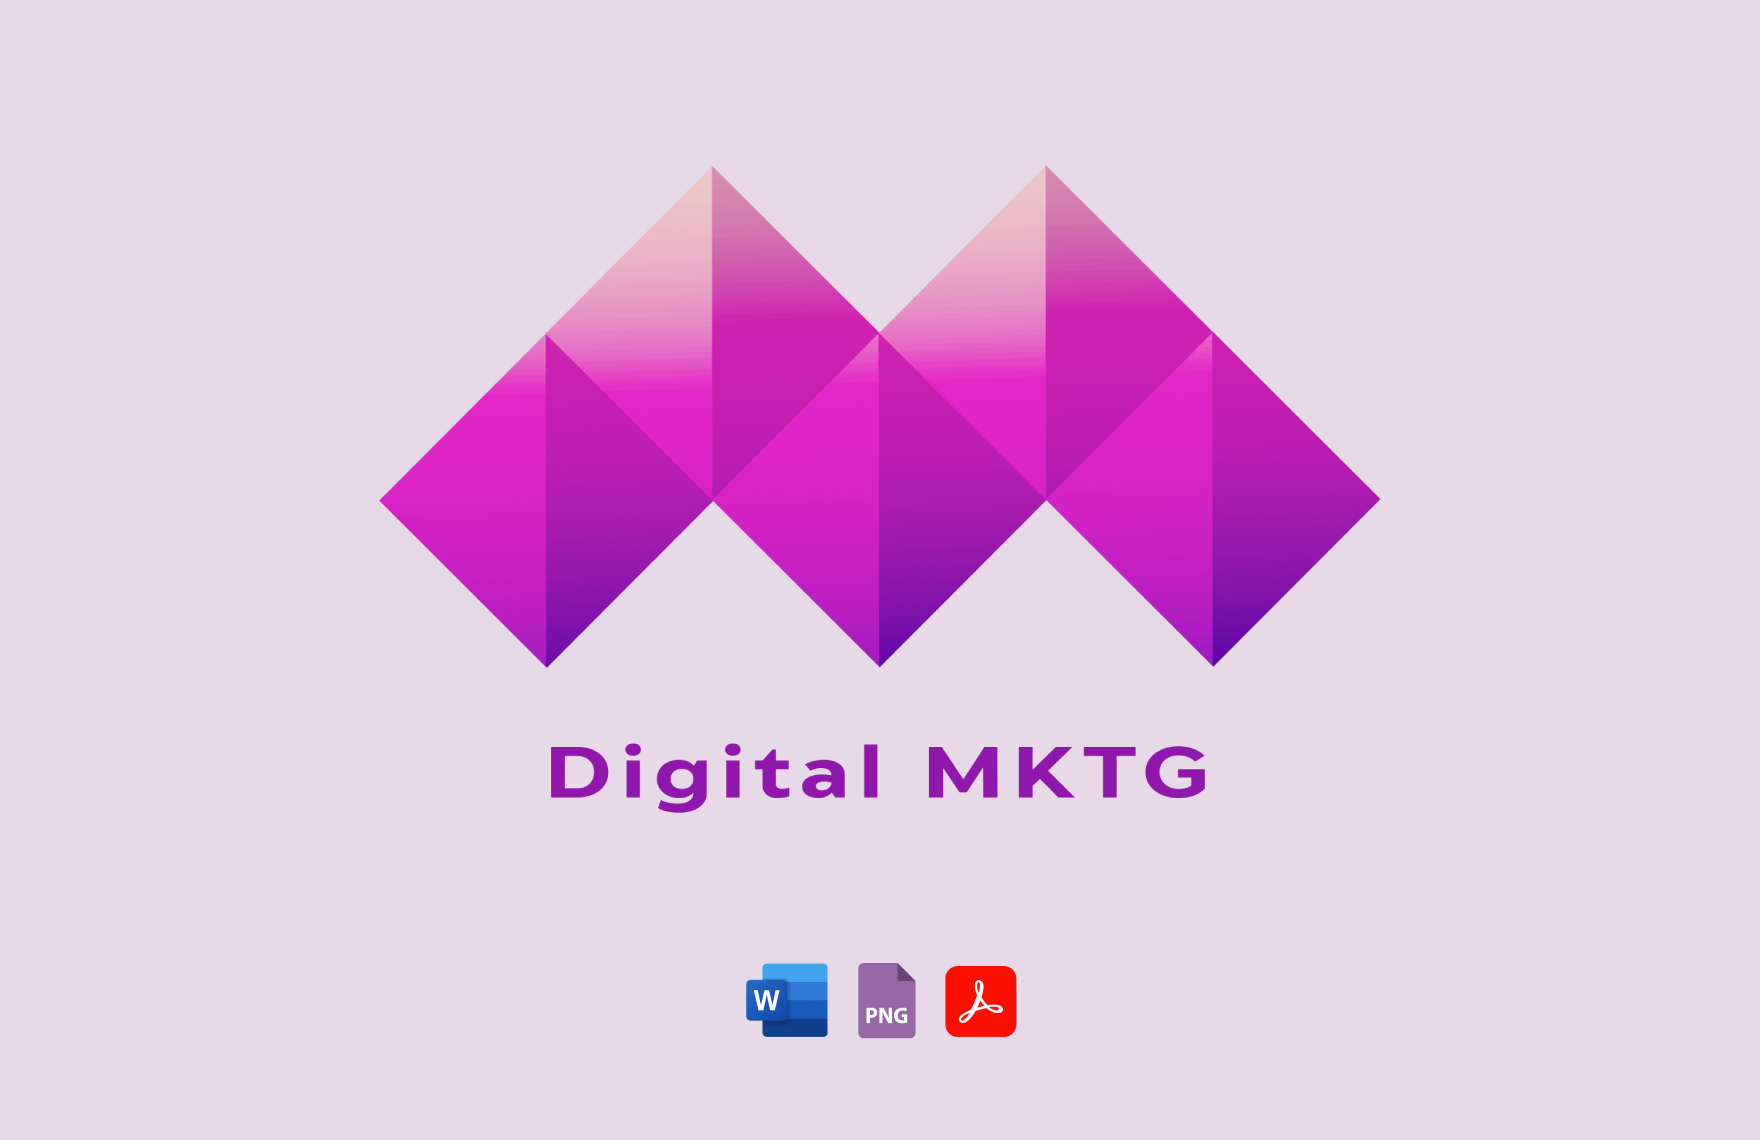 Digital Marketing Agency Partnership Logo Badge Template